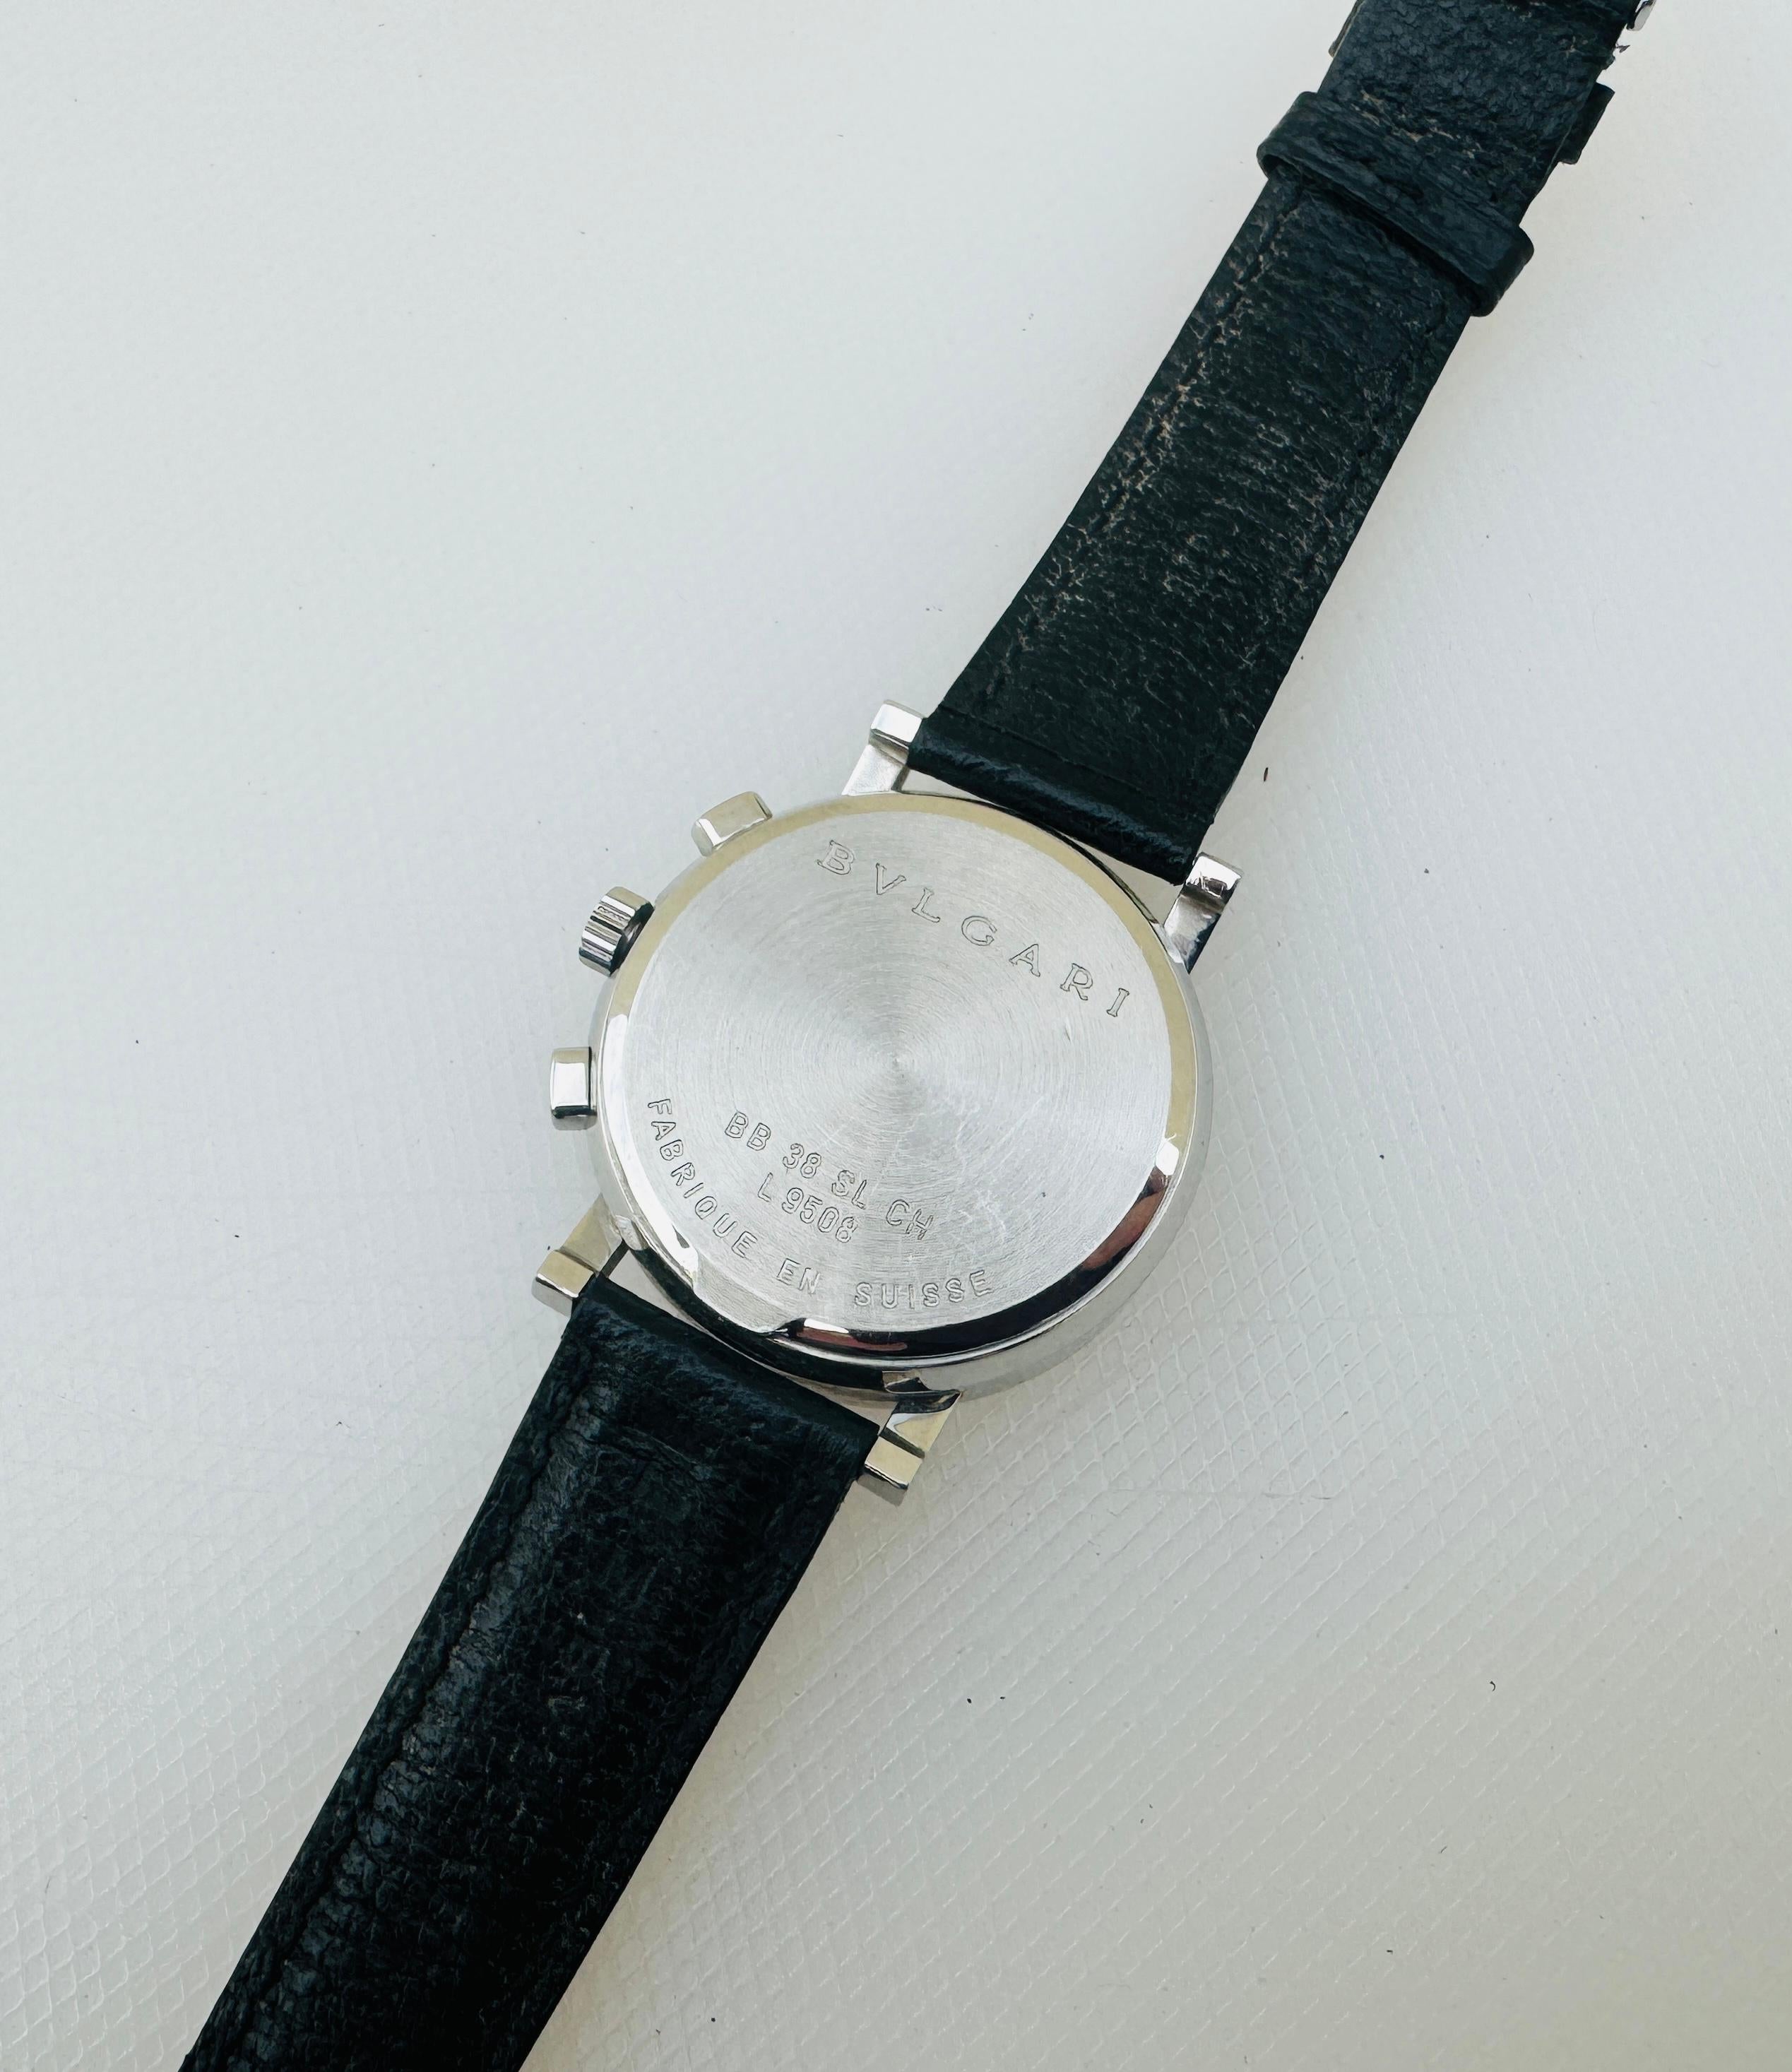 Bulgari Diagono Bvlgari Chronograph Automatic Watch For Sale 3